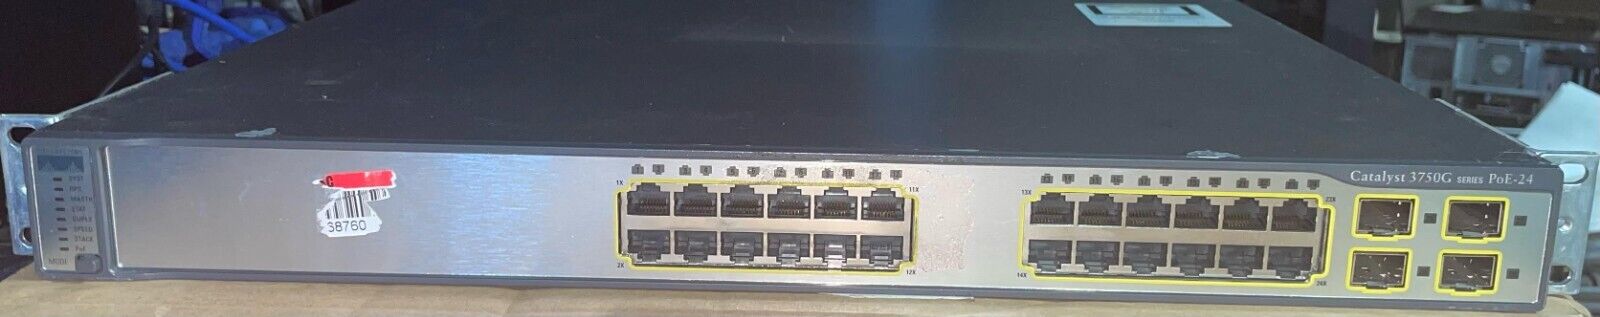 Cisco WS-C3750G-24PS-S 24 Port PoE 3750G Gigabit Switch 